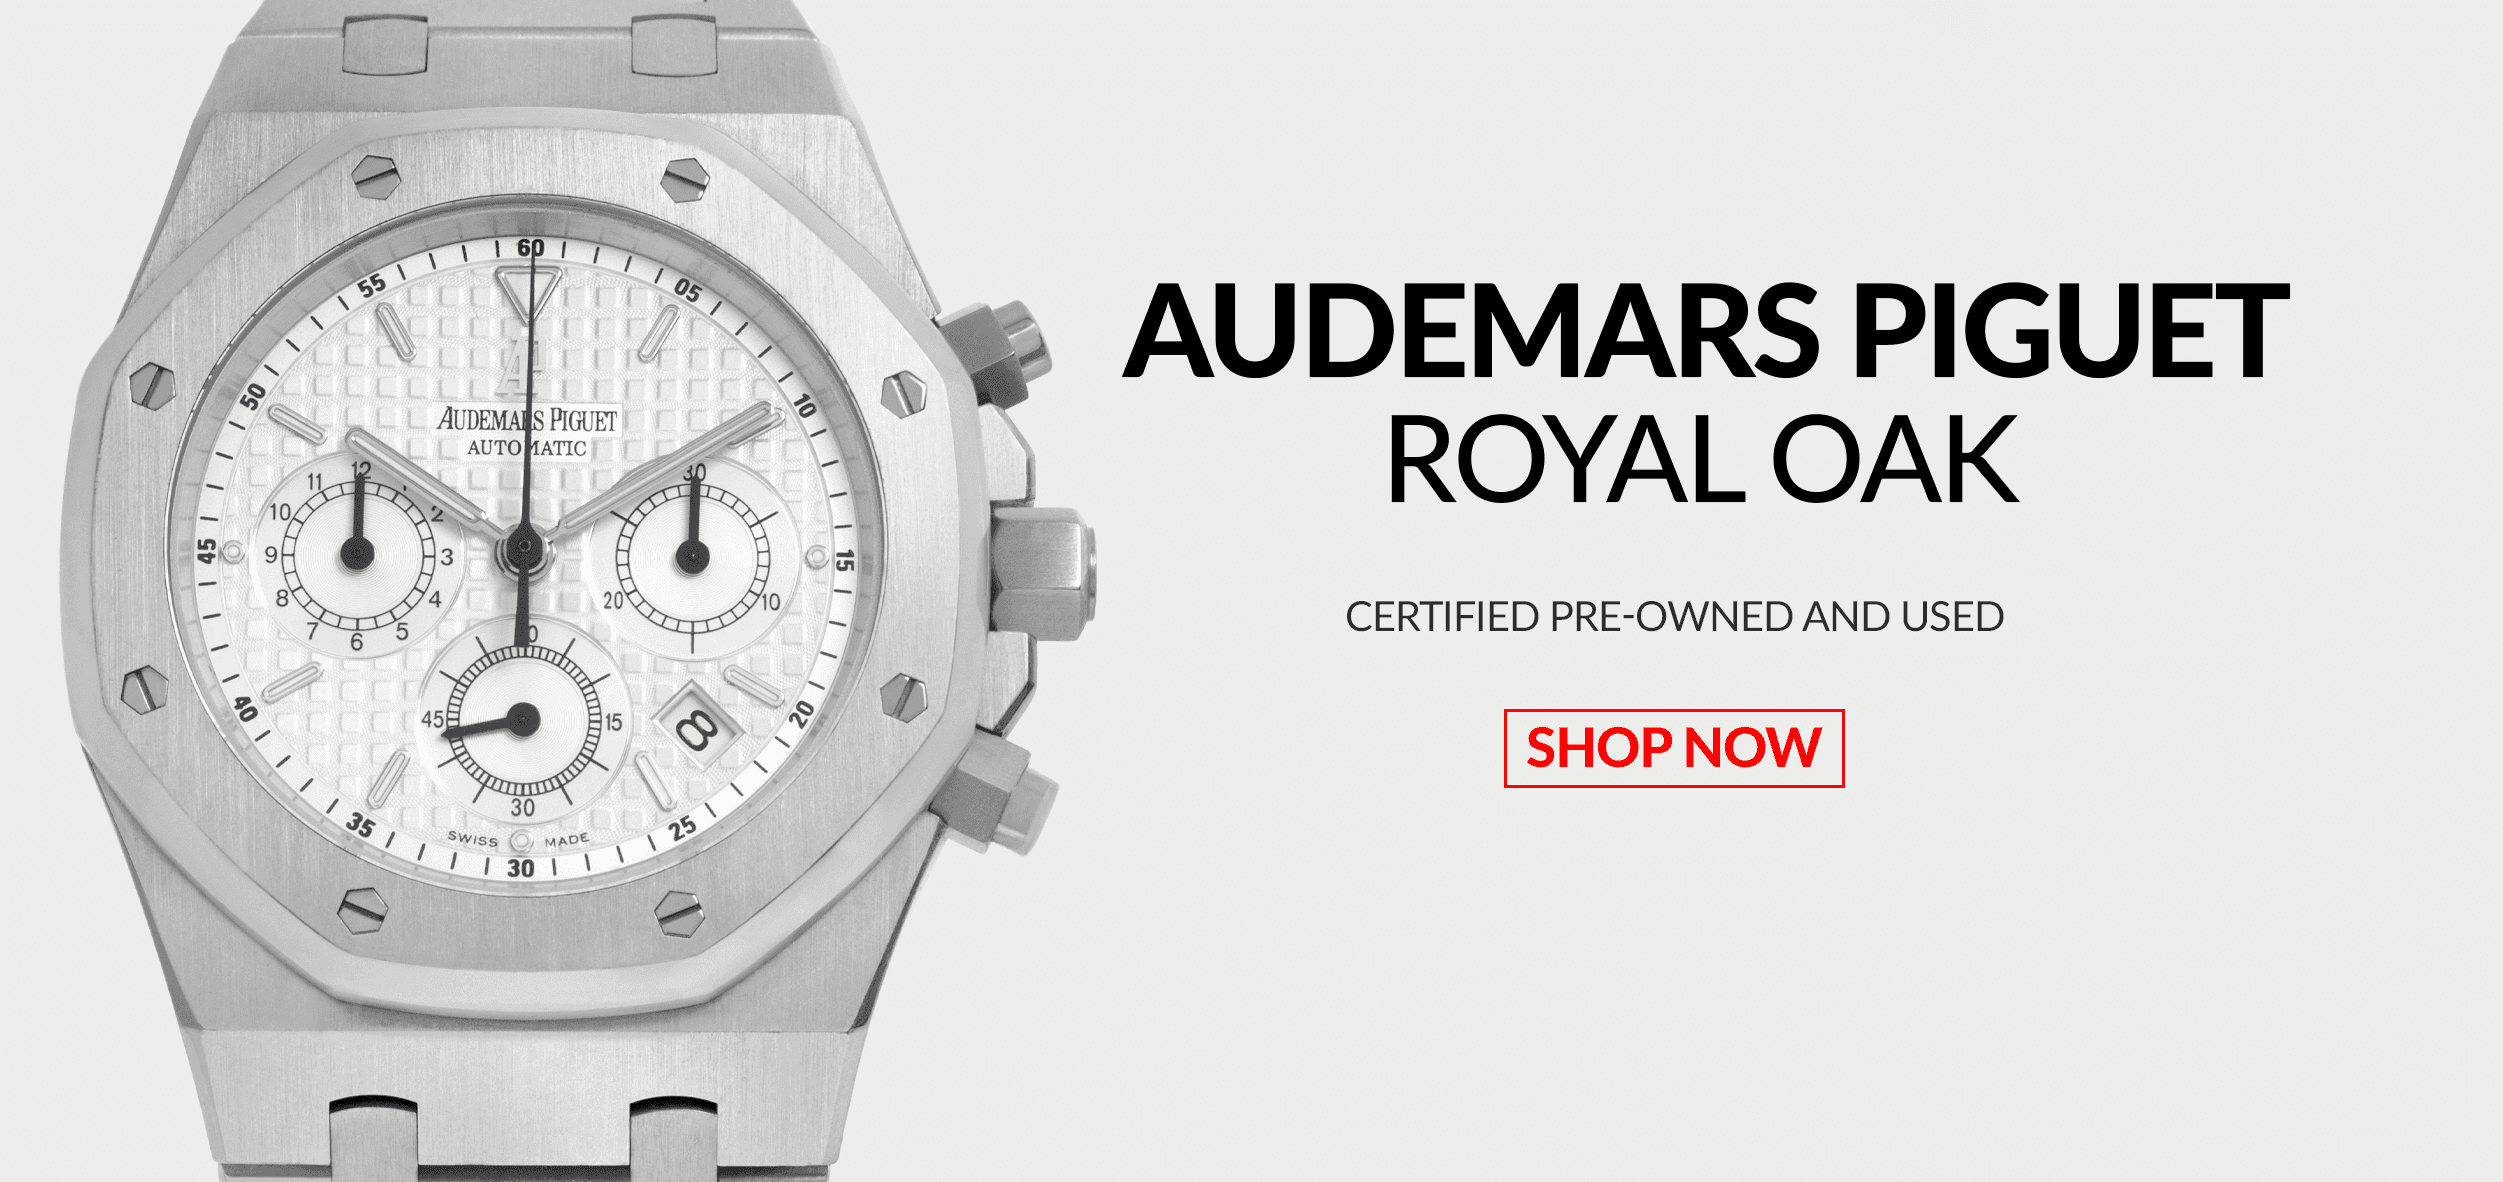 Pre-Owned Certified Used Audemars Piguet Royal Oak Watches Header